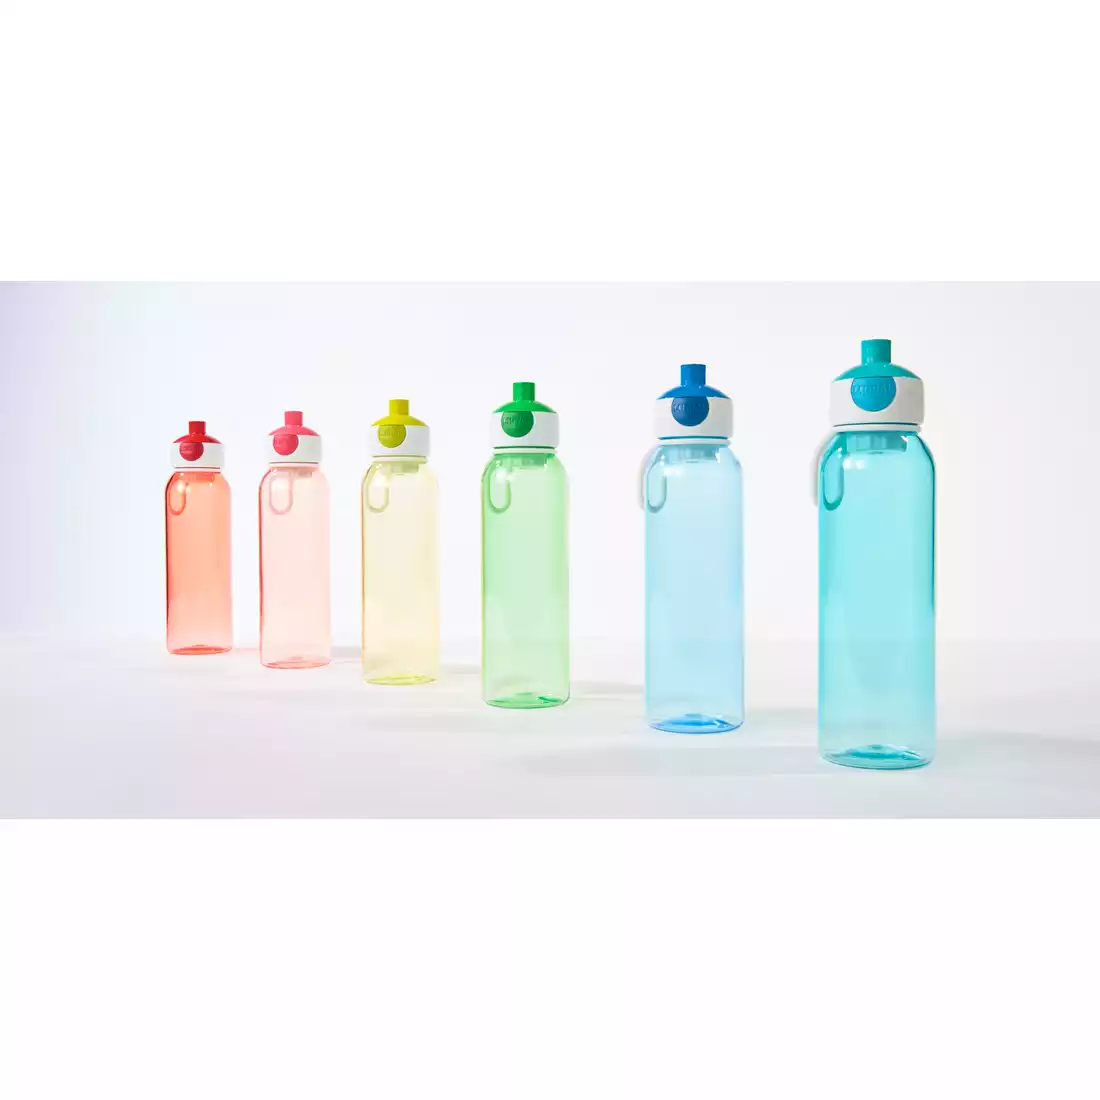 MEPAL CAMPUS water bottle 500ml, blue